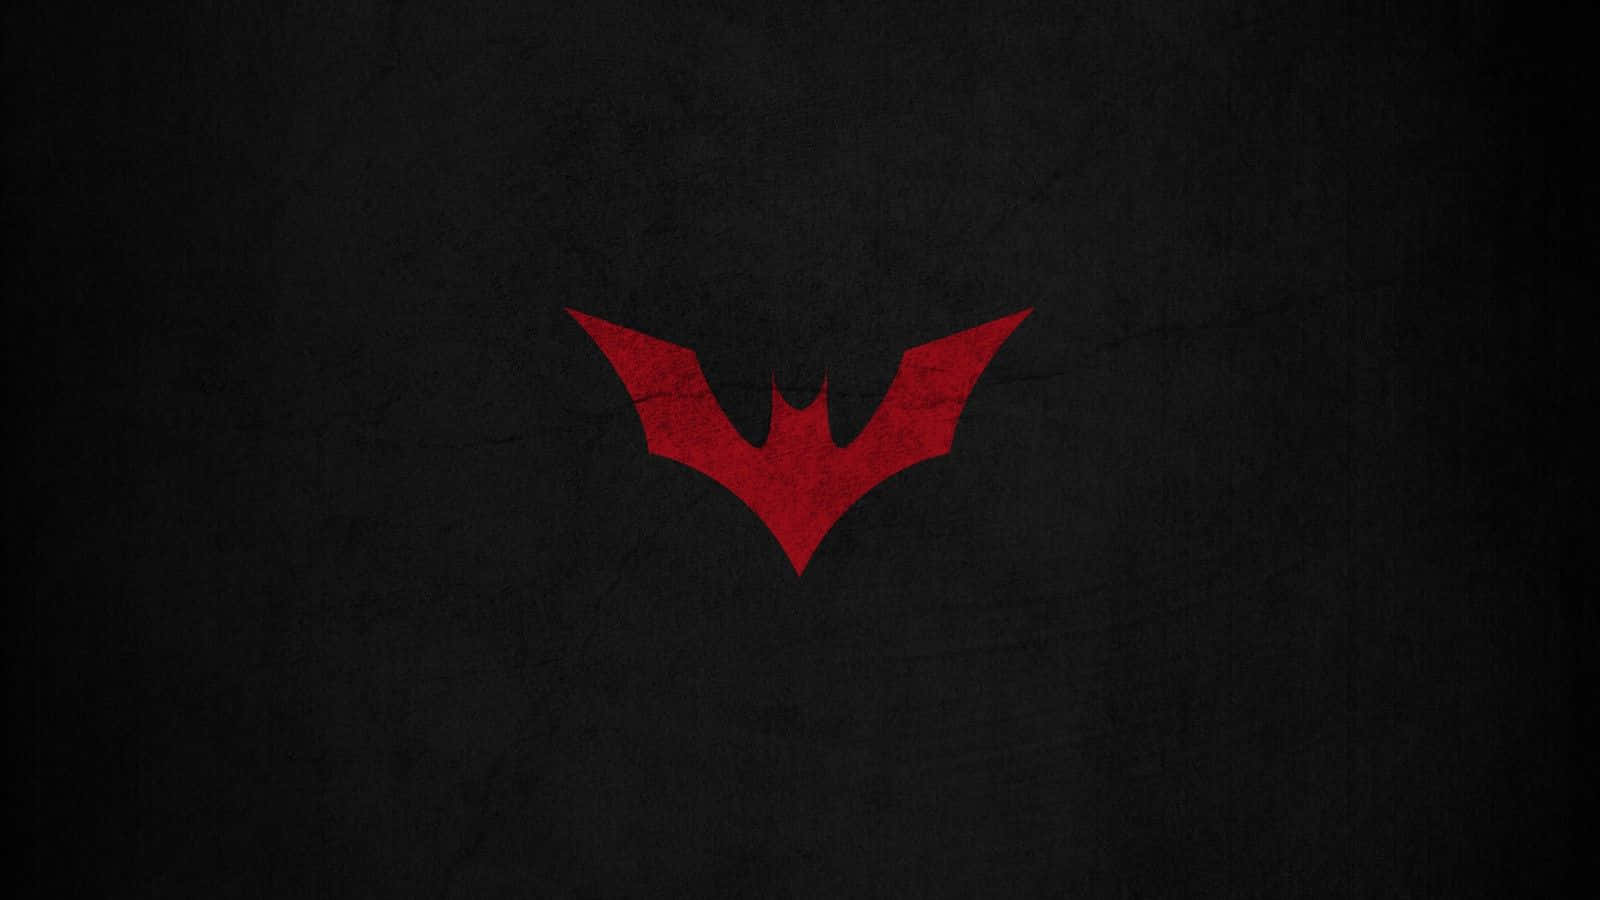 Download The Red Batman Logo Standing Tall Wallpaper | Wallpapers.com